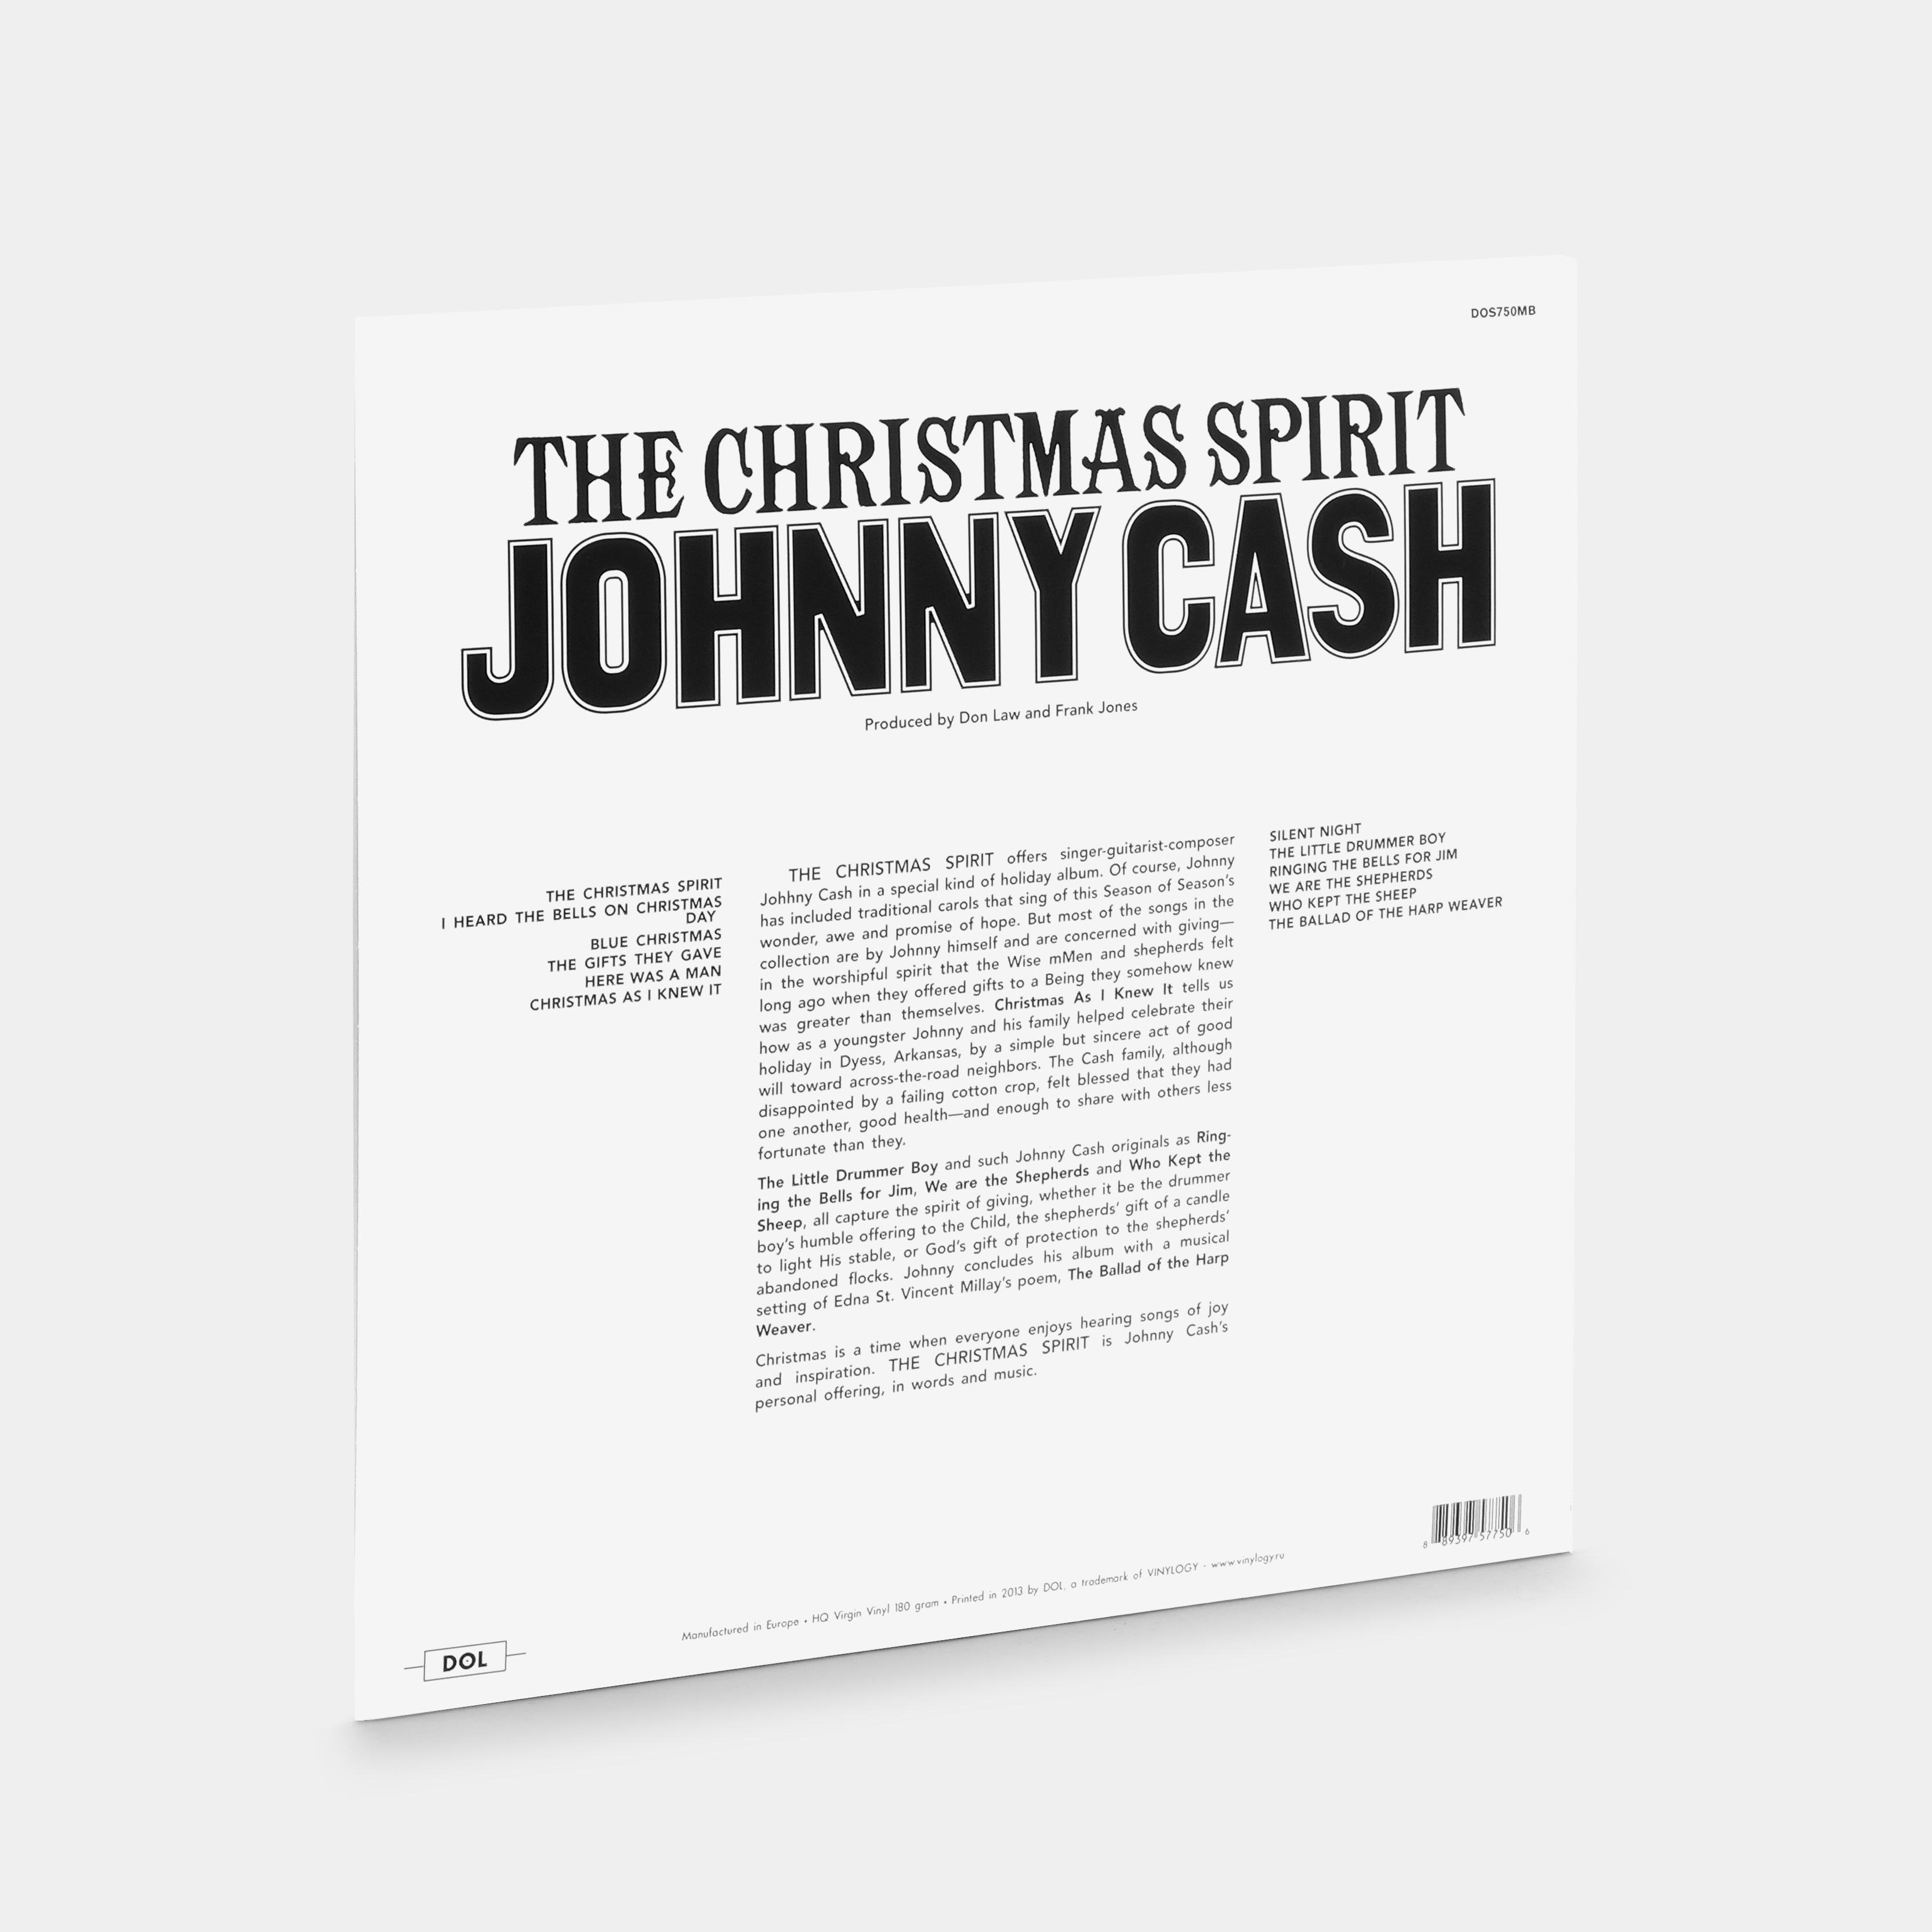 Johnny Cash - The Christmas Spirit LP Red Vinyl Record